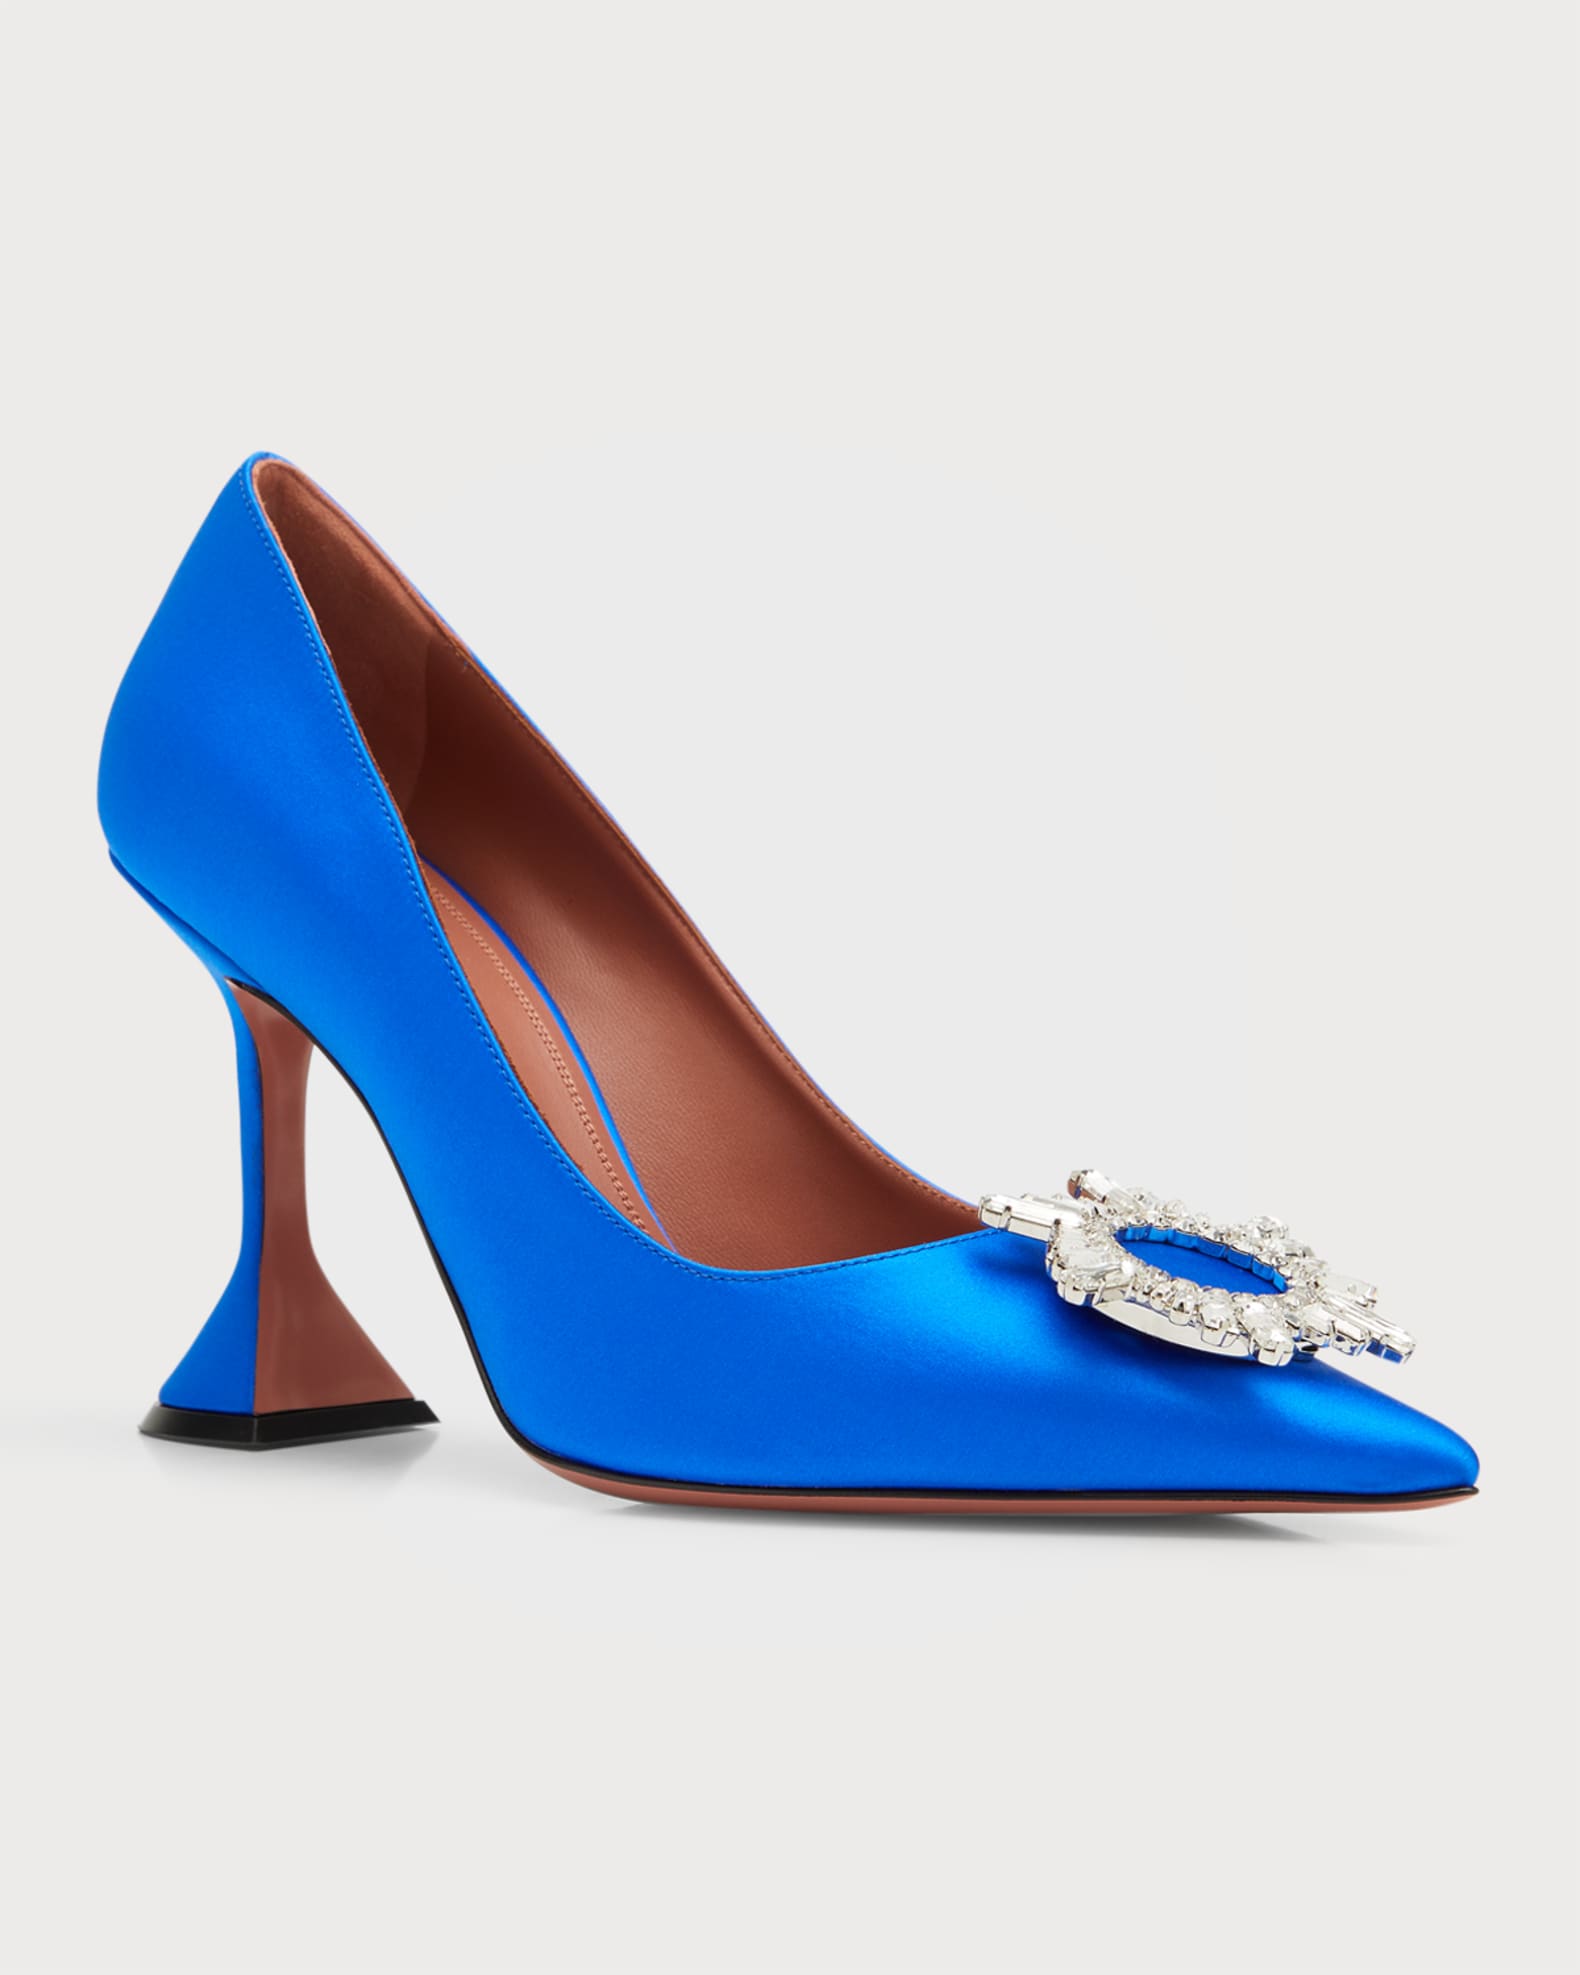 Royal blue Amina Muaddi heels